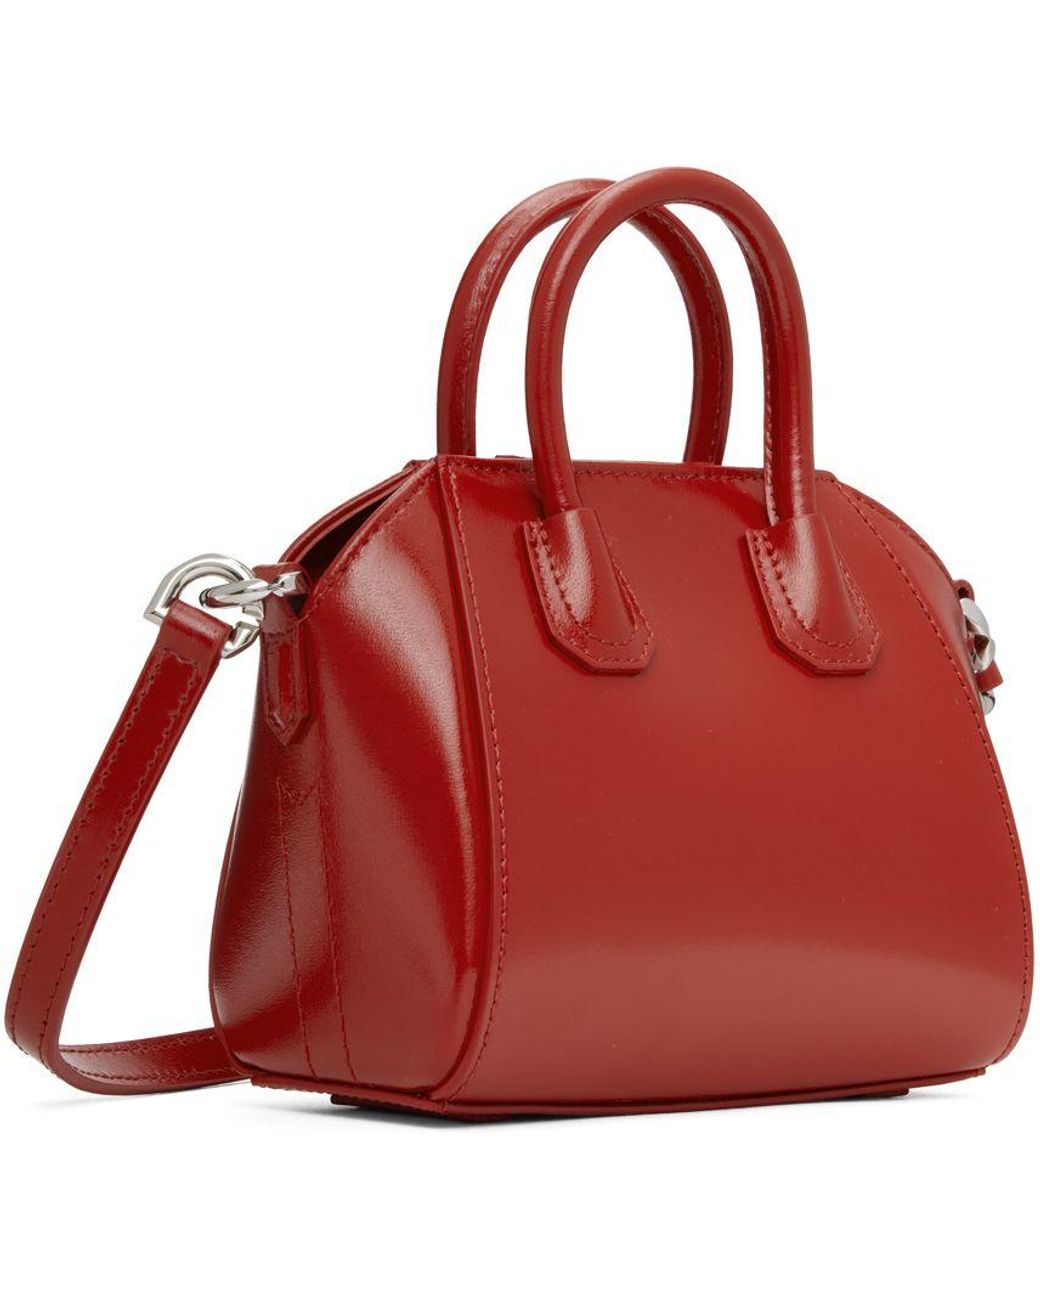 Givenchy Red Mini Antigona Bag